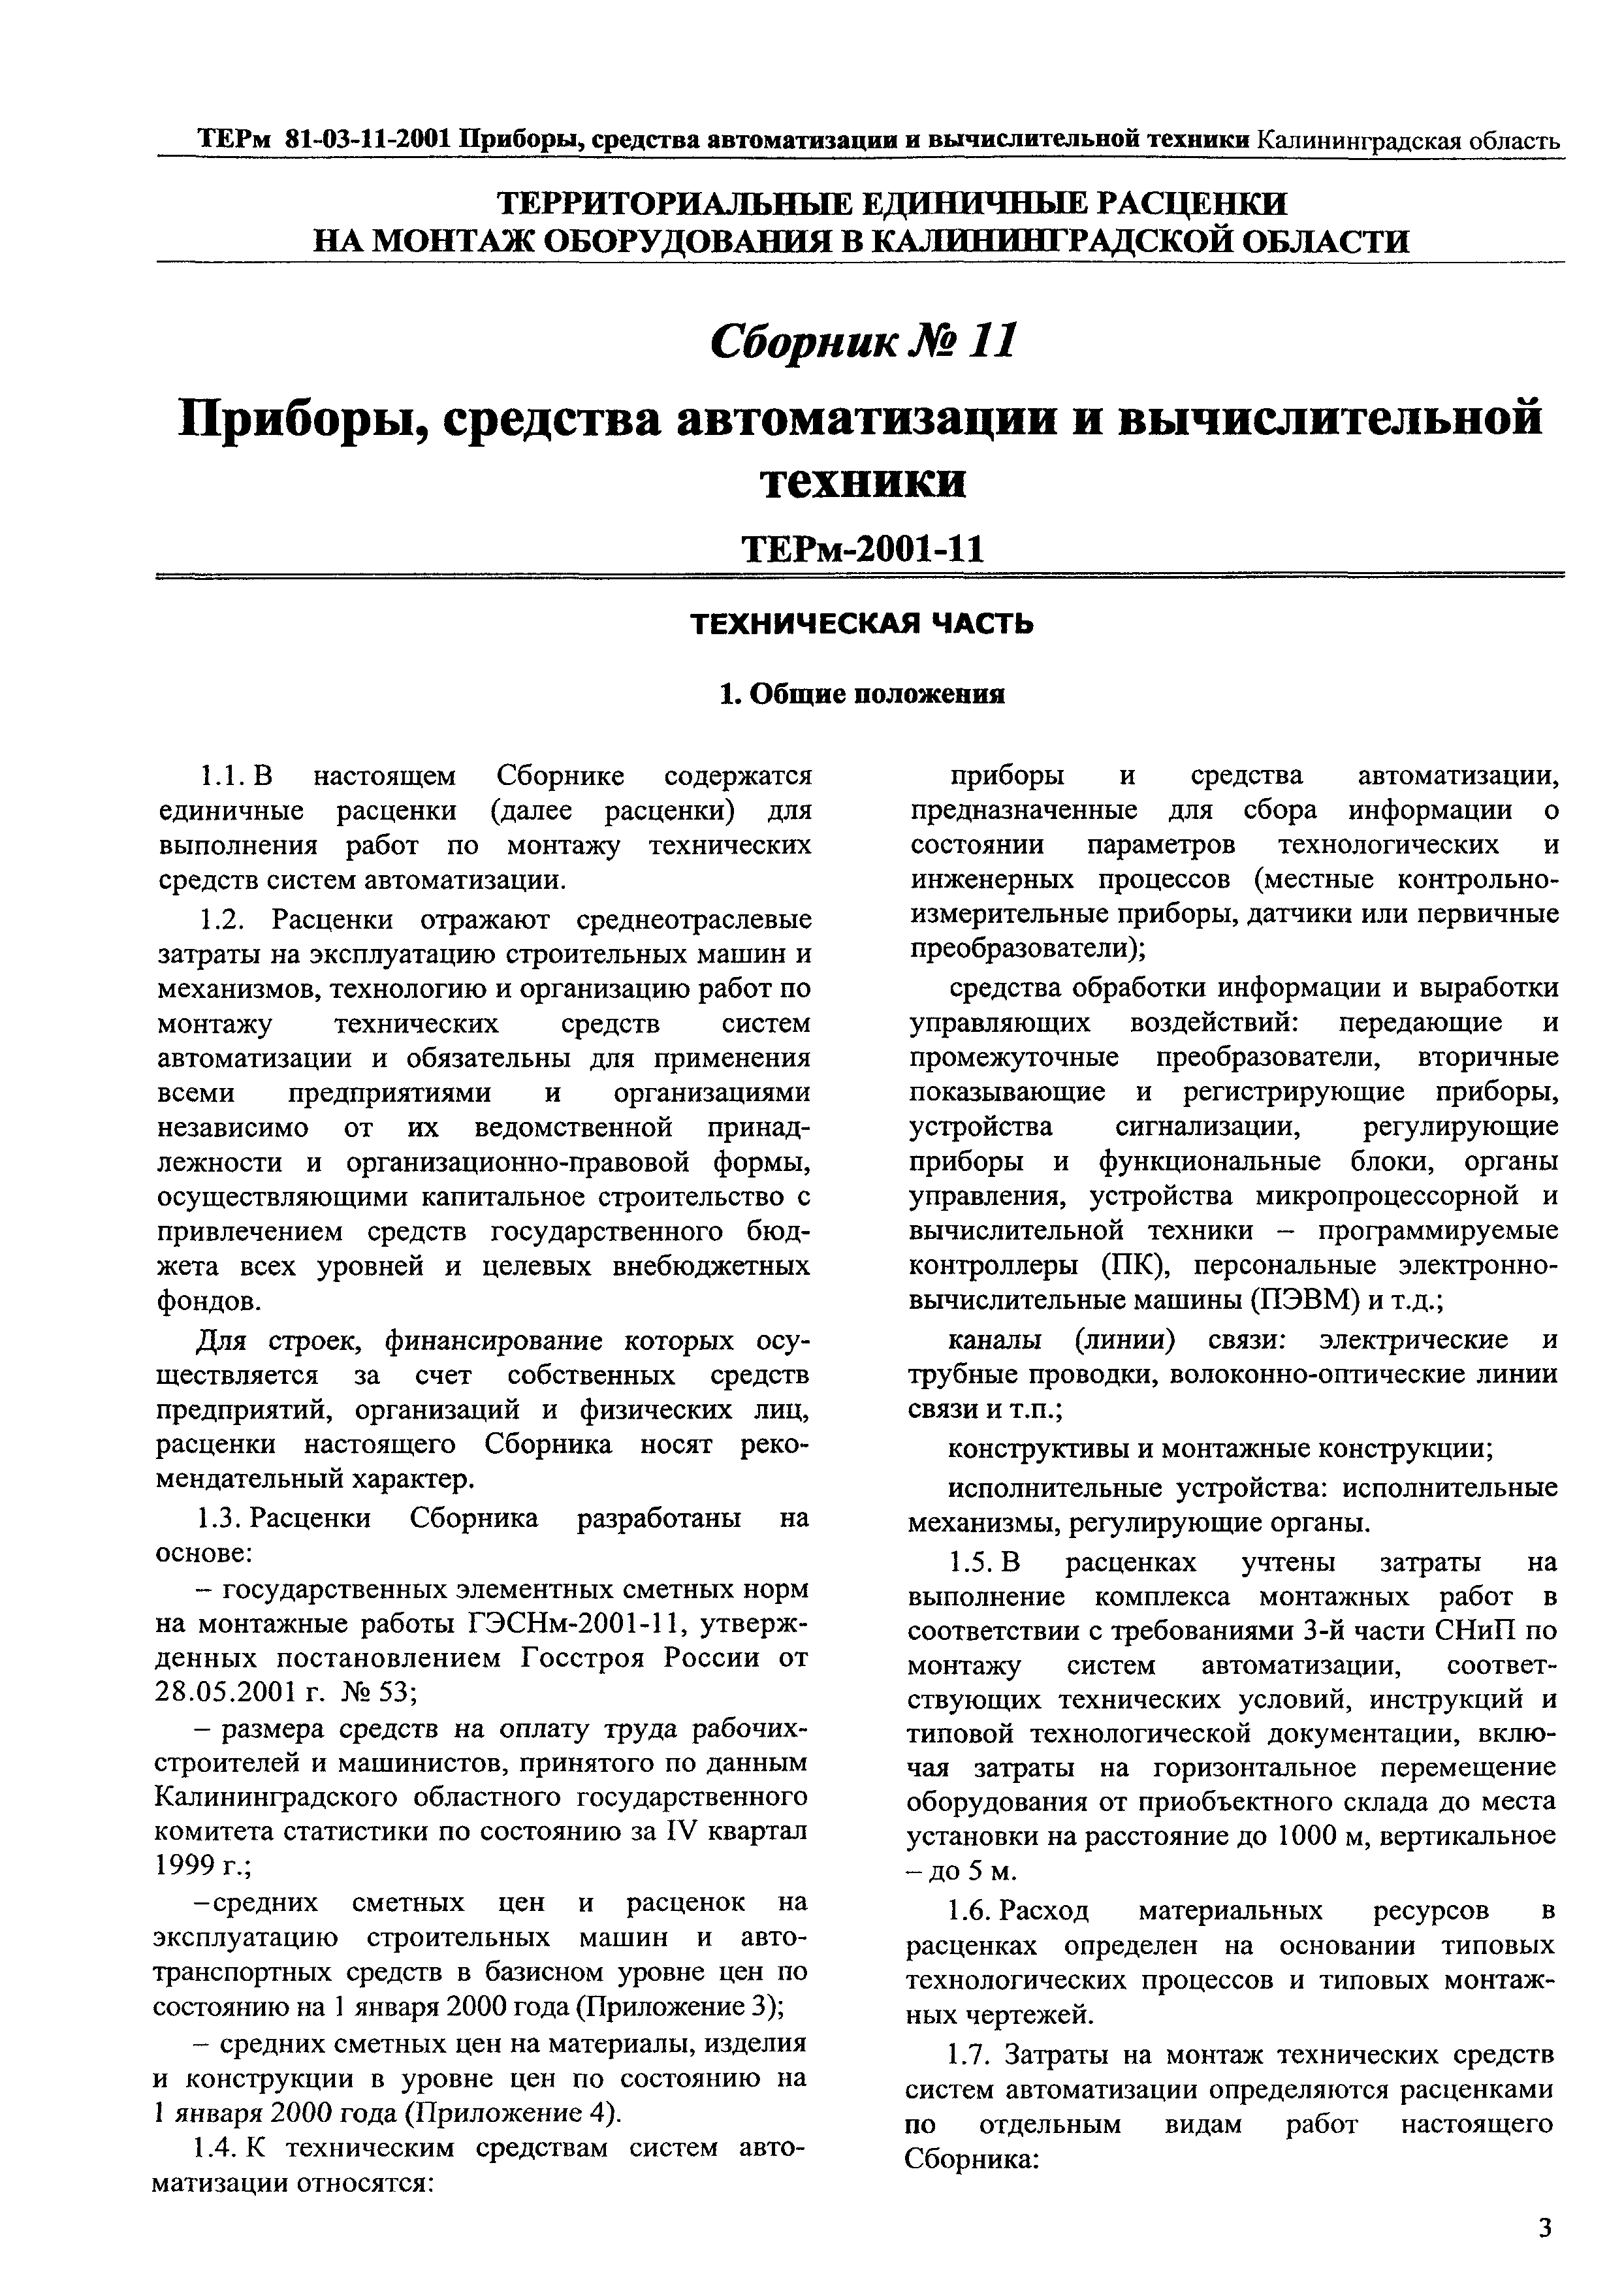 ТЕРм Калининградской области 2001-11